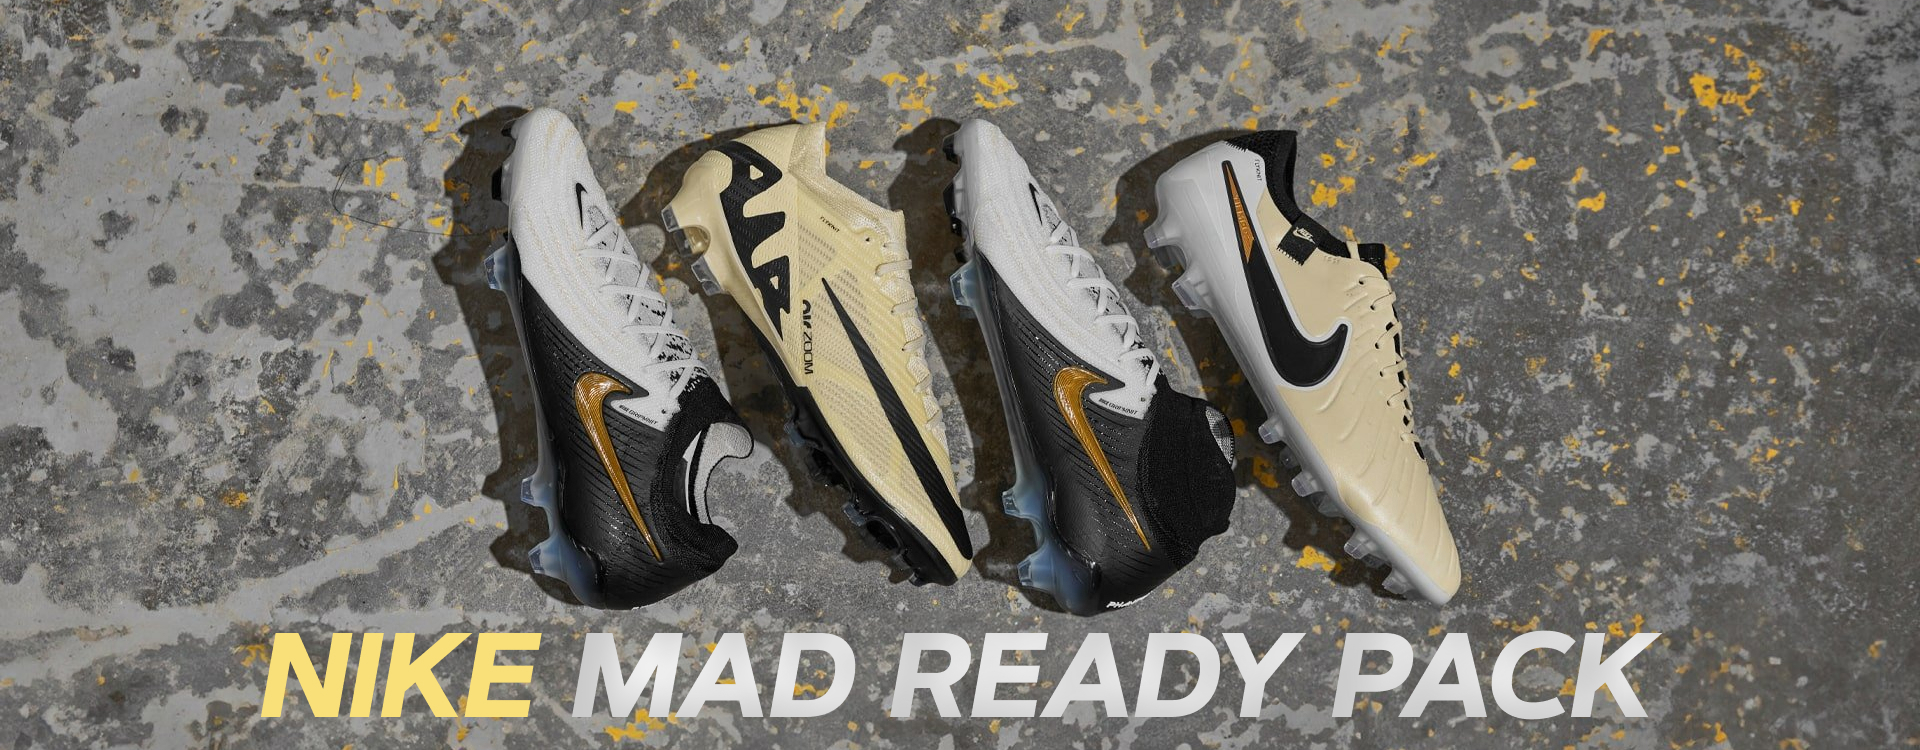 Nike Mad Ready